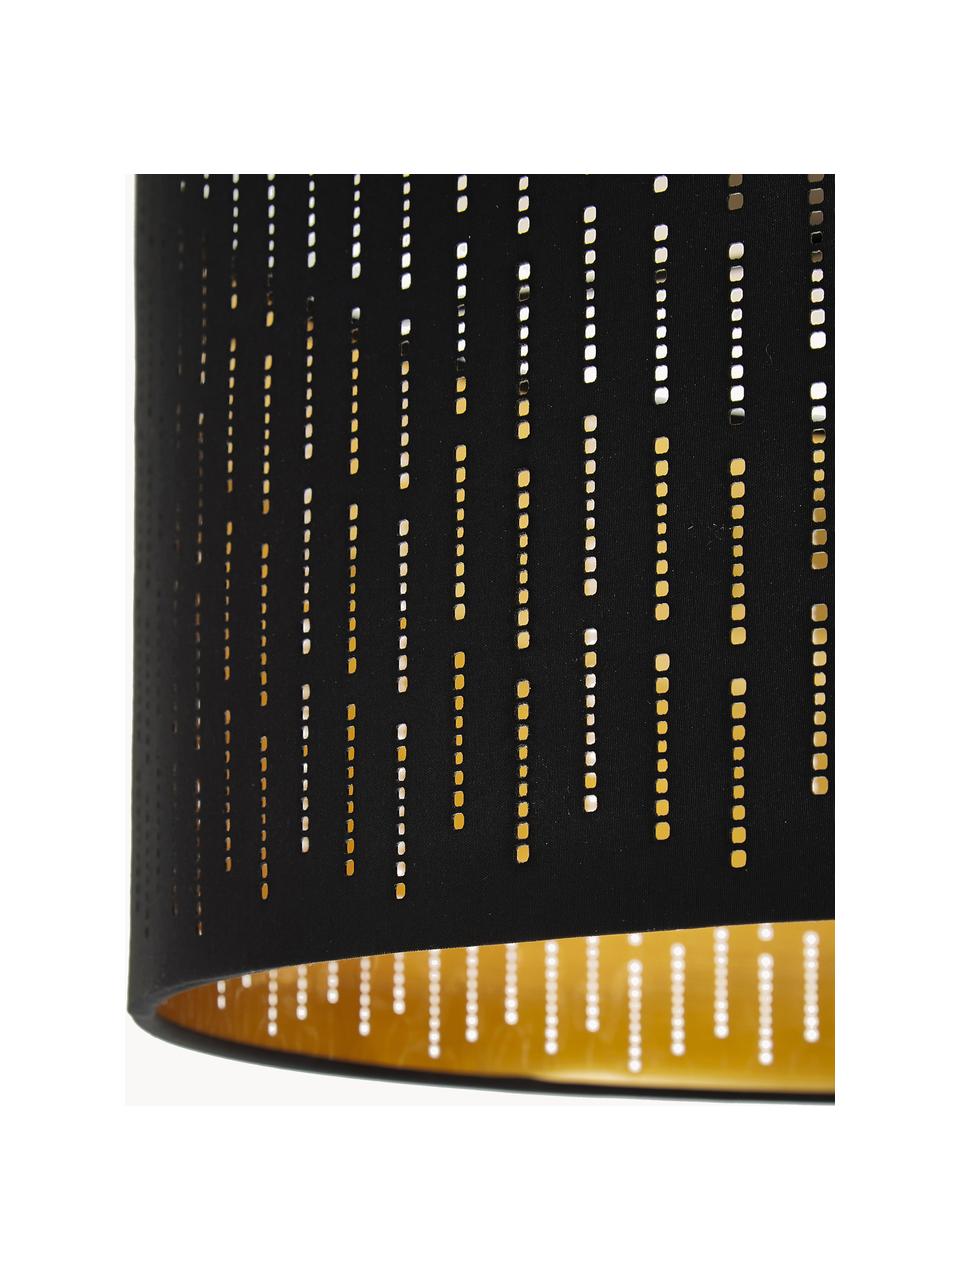 Plafondlamp Varillas-goudkleurig, Lampenkap: textiel, kunststof, Zwart, goudkleurig, Ø 48 x H 22 cm